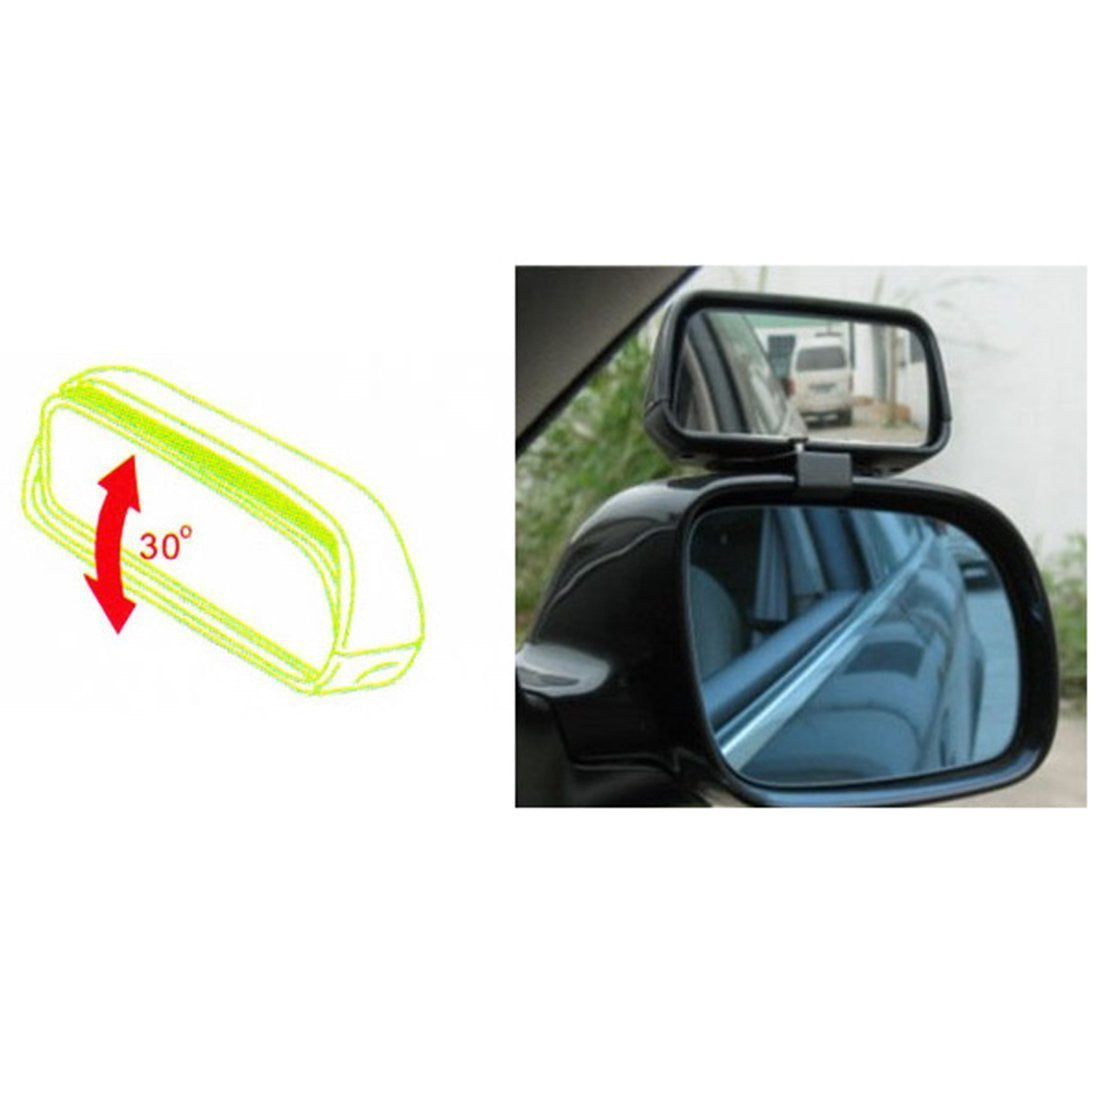 Convex mirrors use – Car mirrors